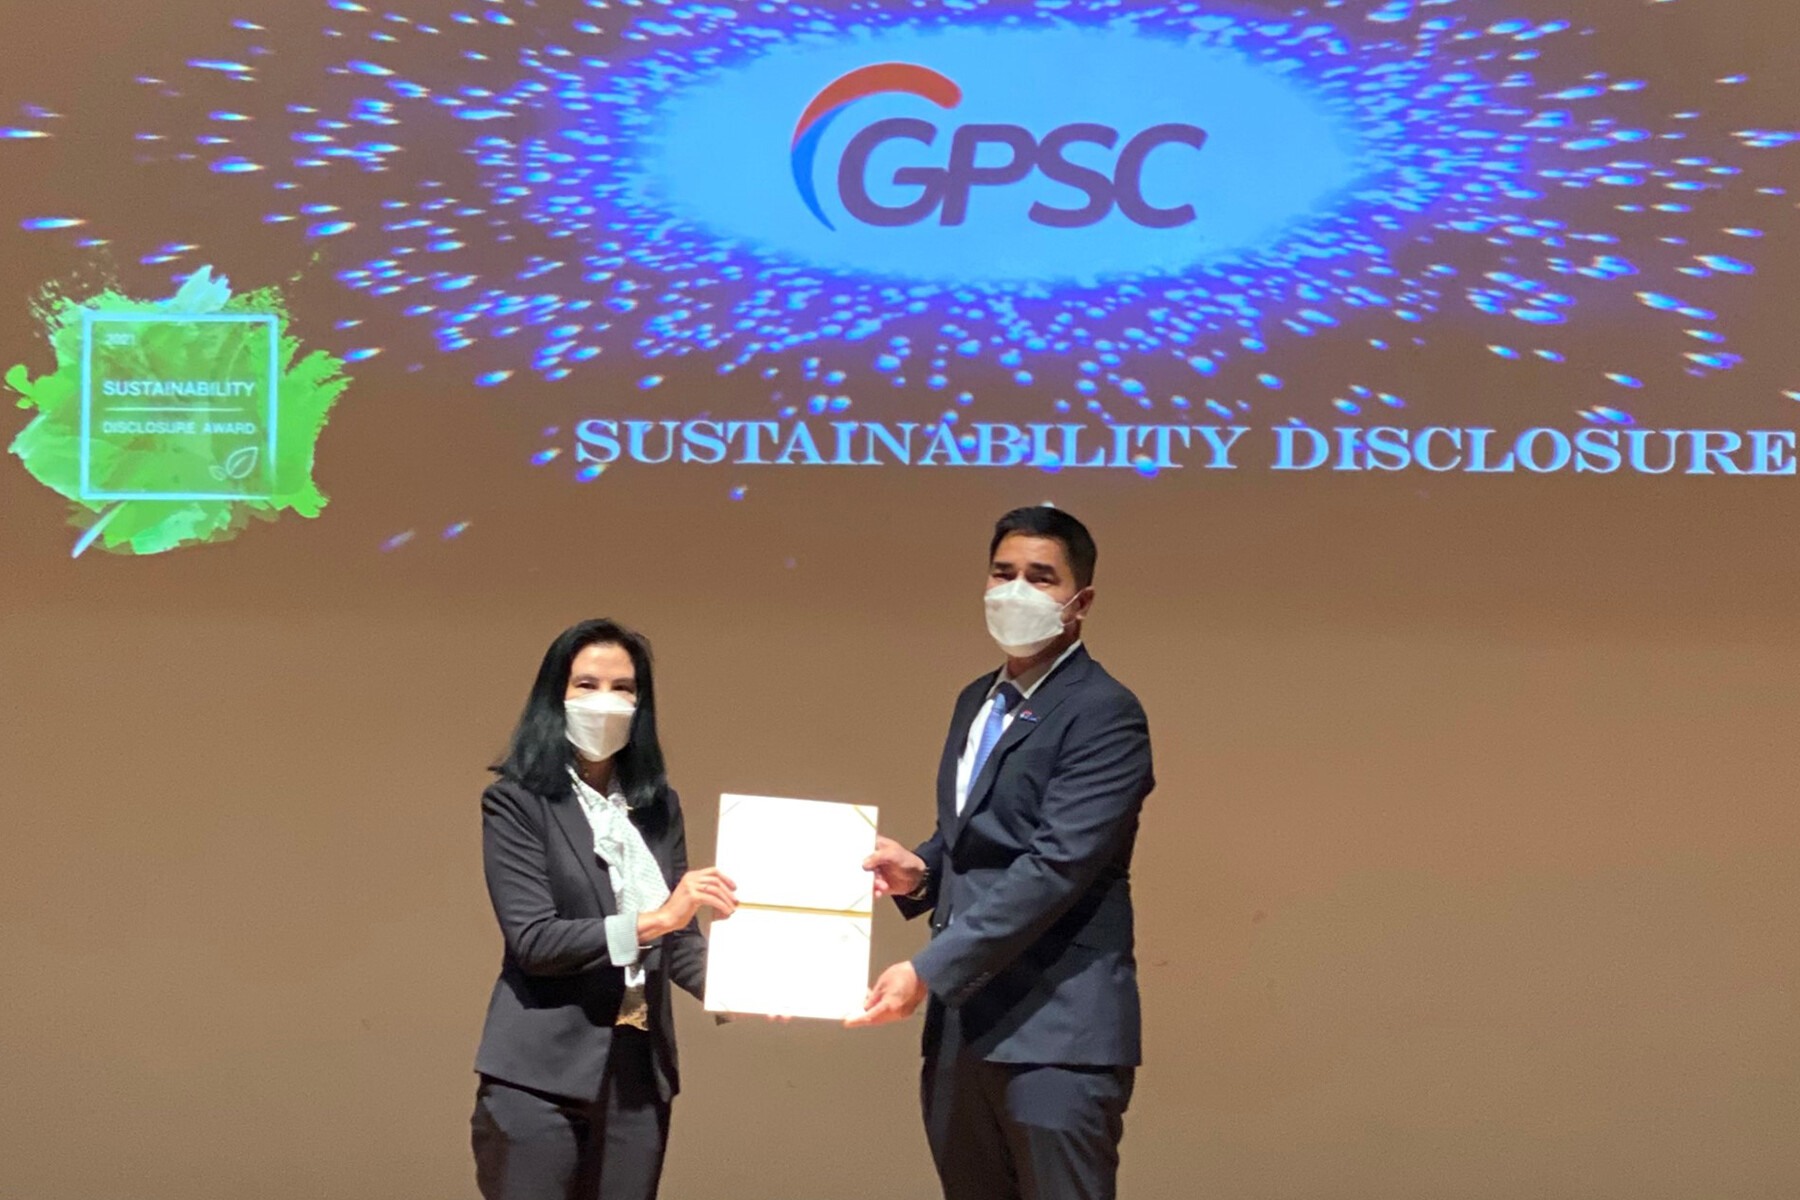 GPSC คว้ารางวัล "Sustainability Disclosure Award"  ต่อเนื่องปีที่ 3